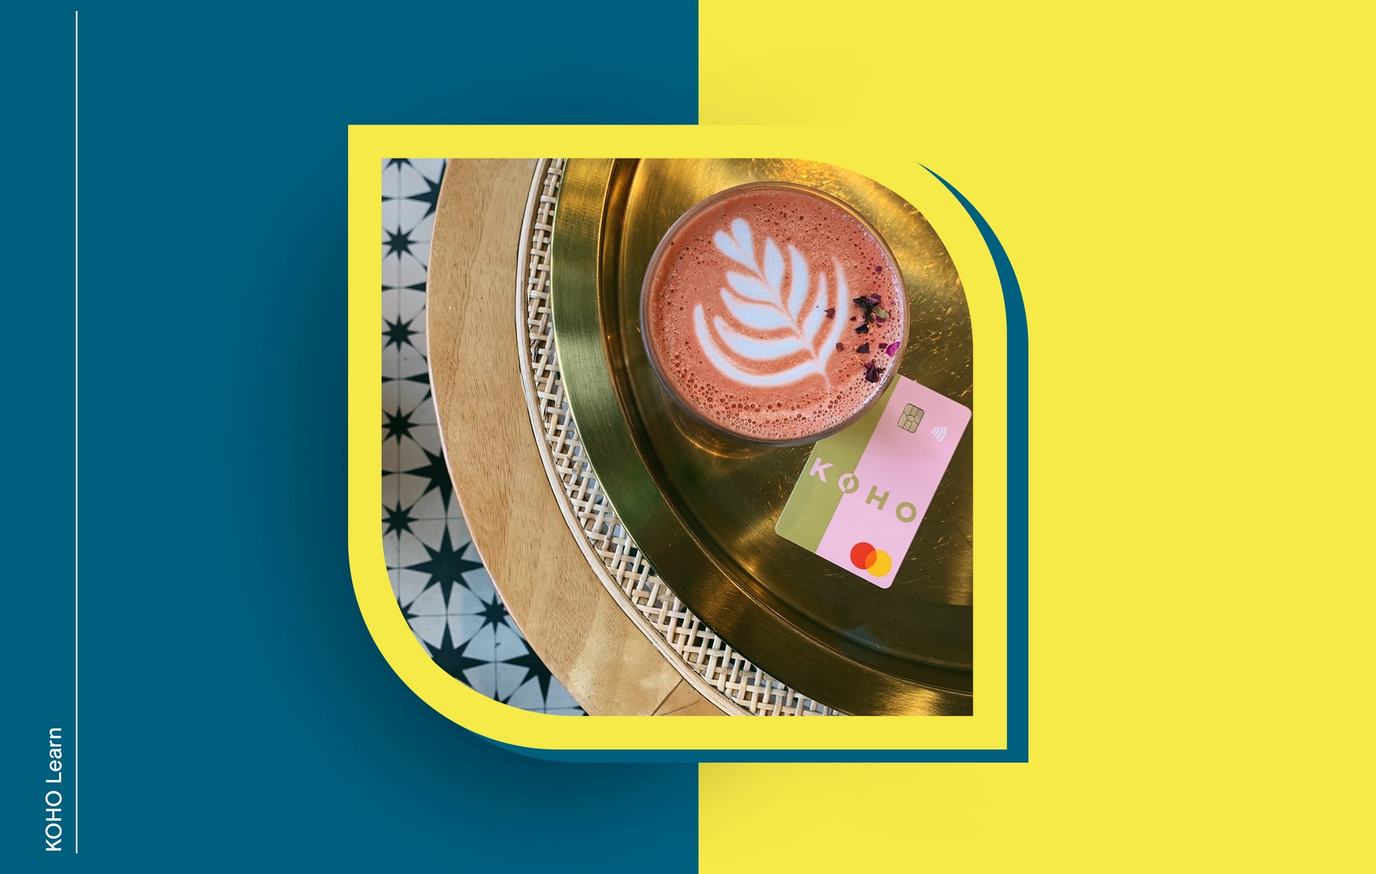 KOHO credit card next to a coffee